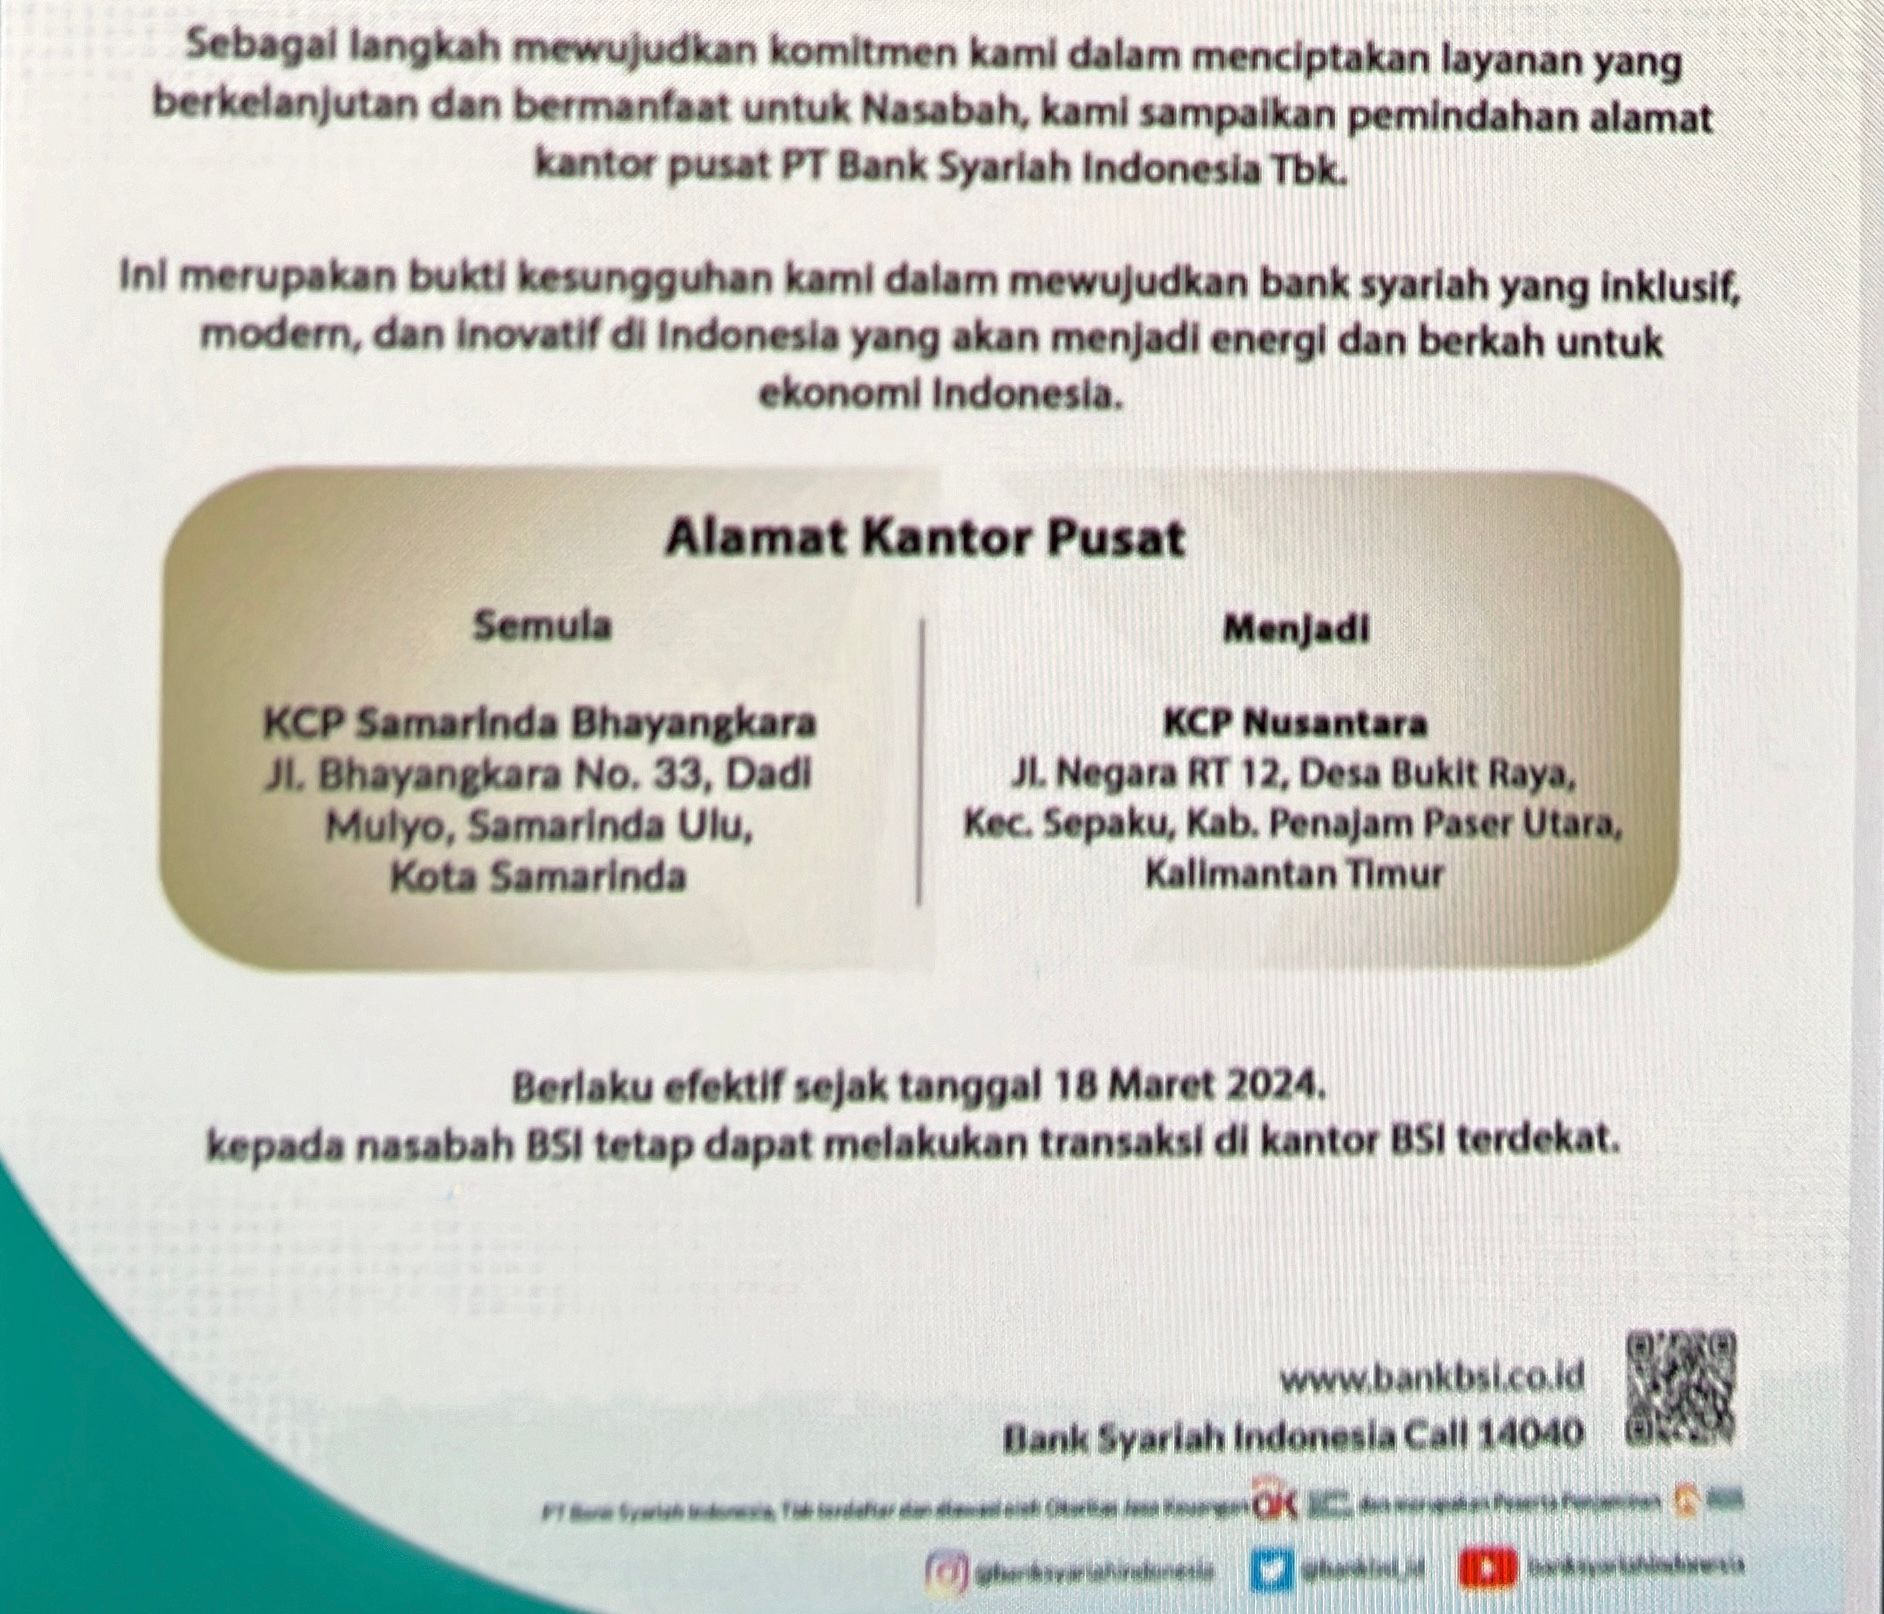 Bank Syariah Indonesia Relokasi KCP Samarinda Bhayangkara ke IKN